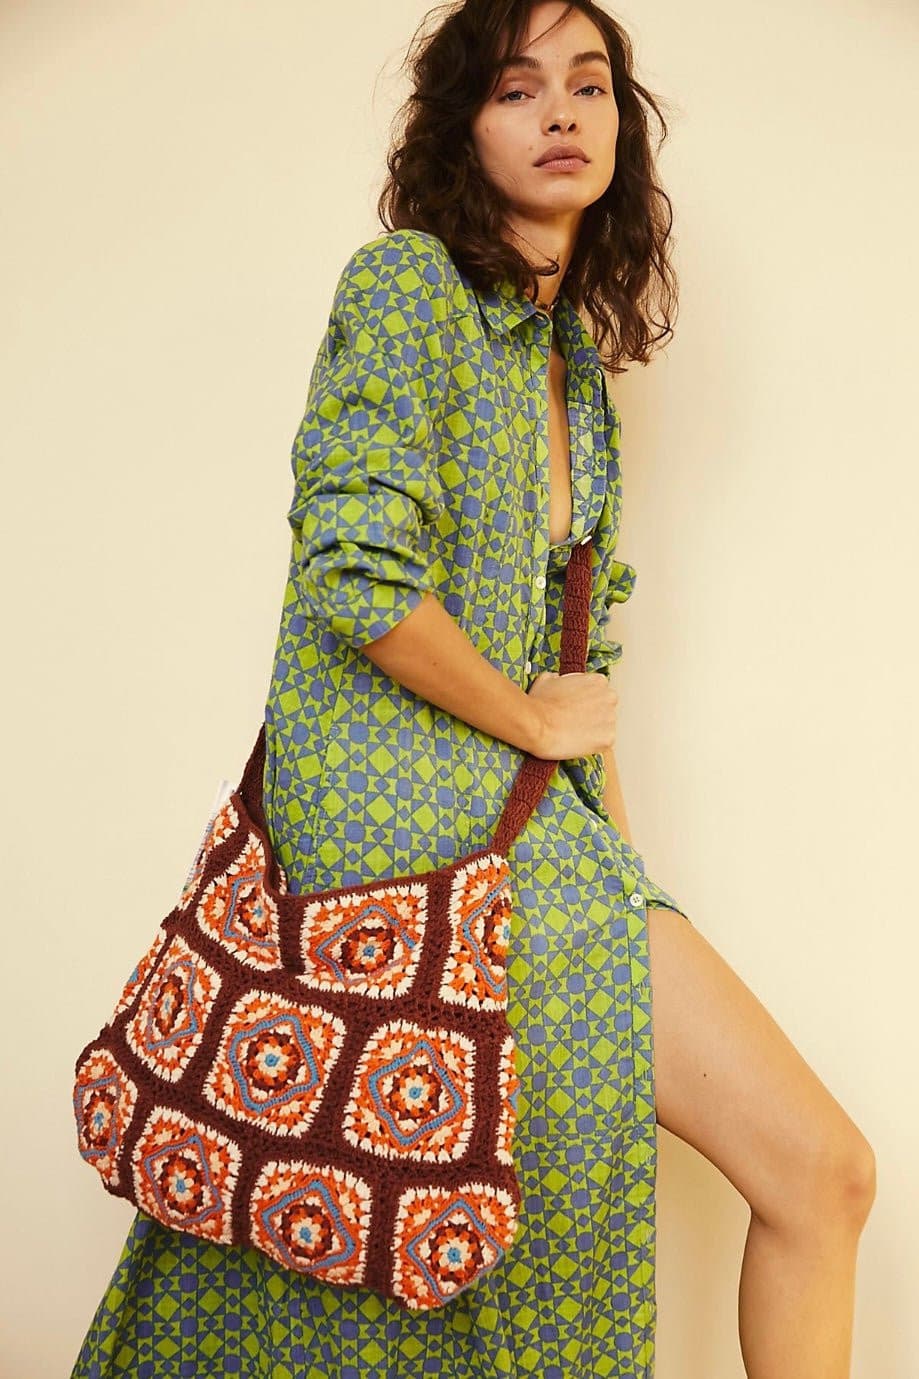 CATCH ME CROCHET BAG - sustainably made MOMO NEW YORK sustainable clothing, crochet slow fashion